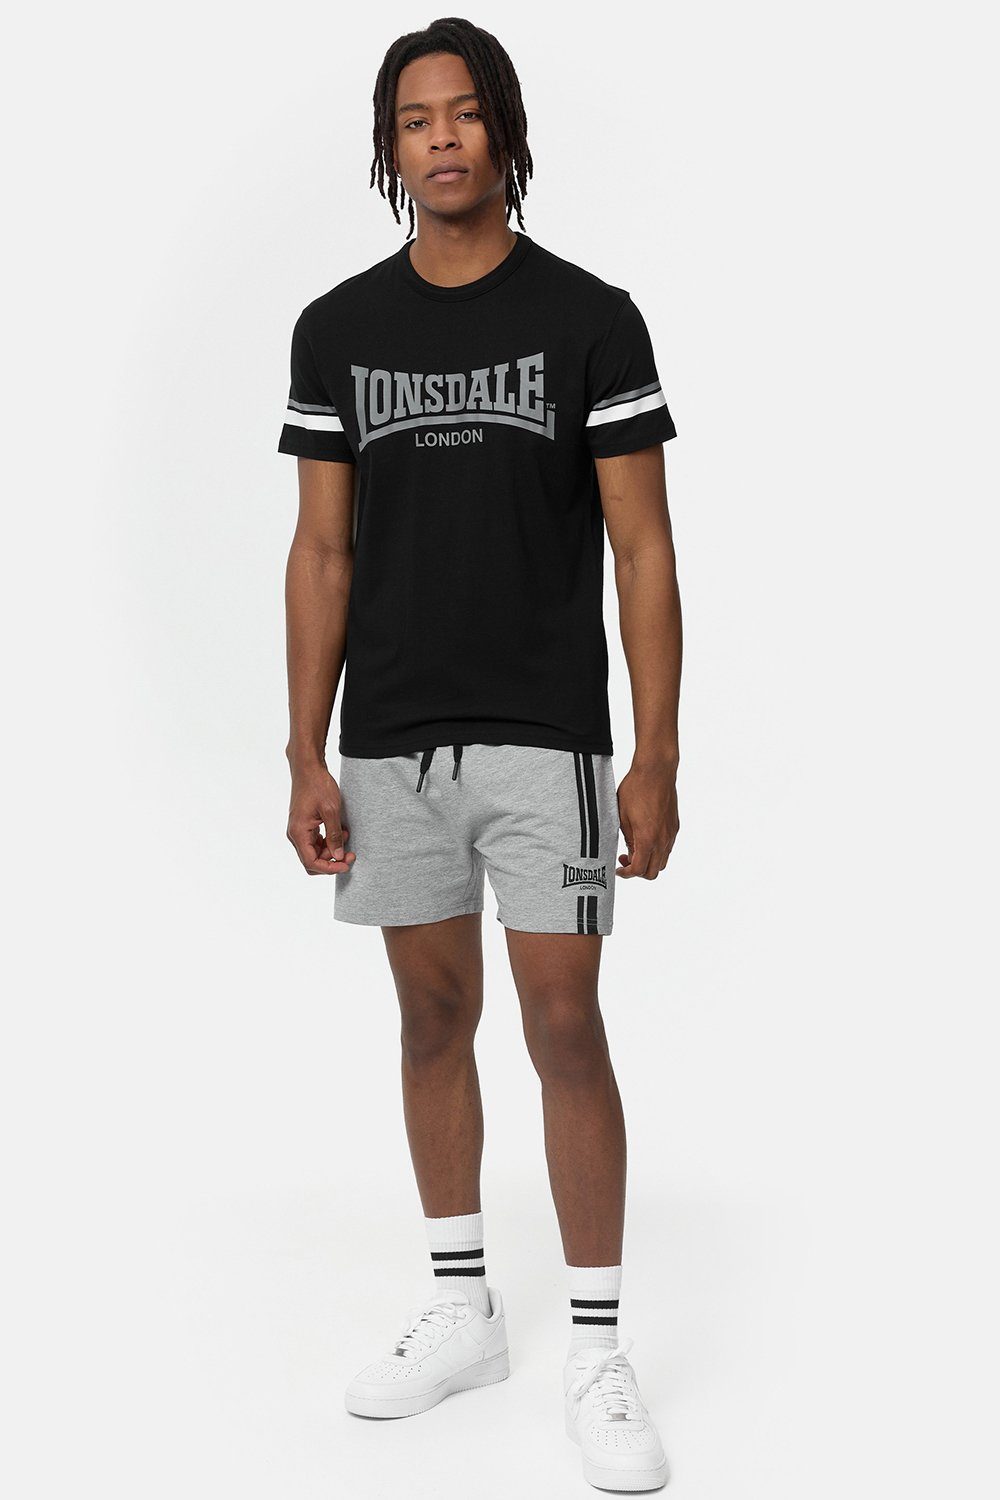 Lonsdale CREICH T-Shirt Black/White/Grey